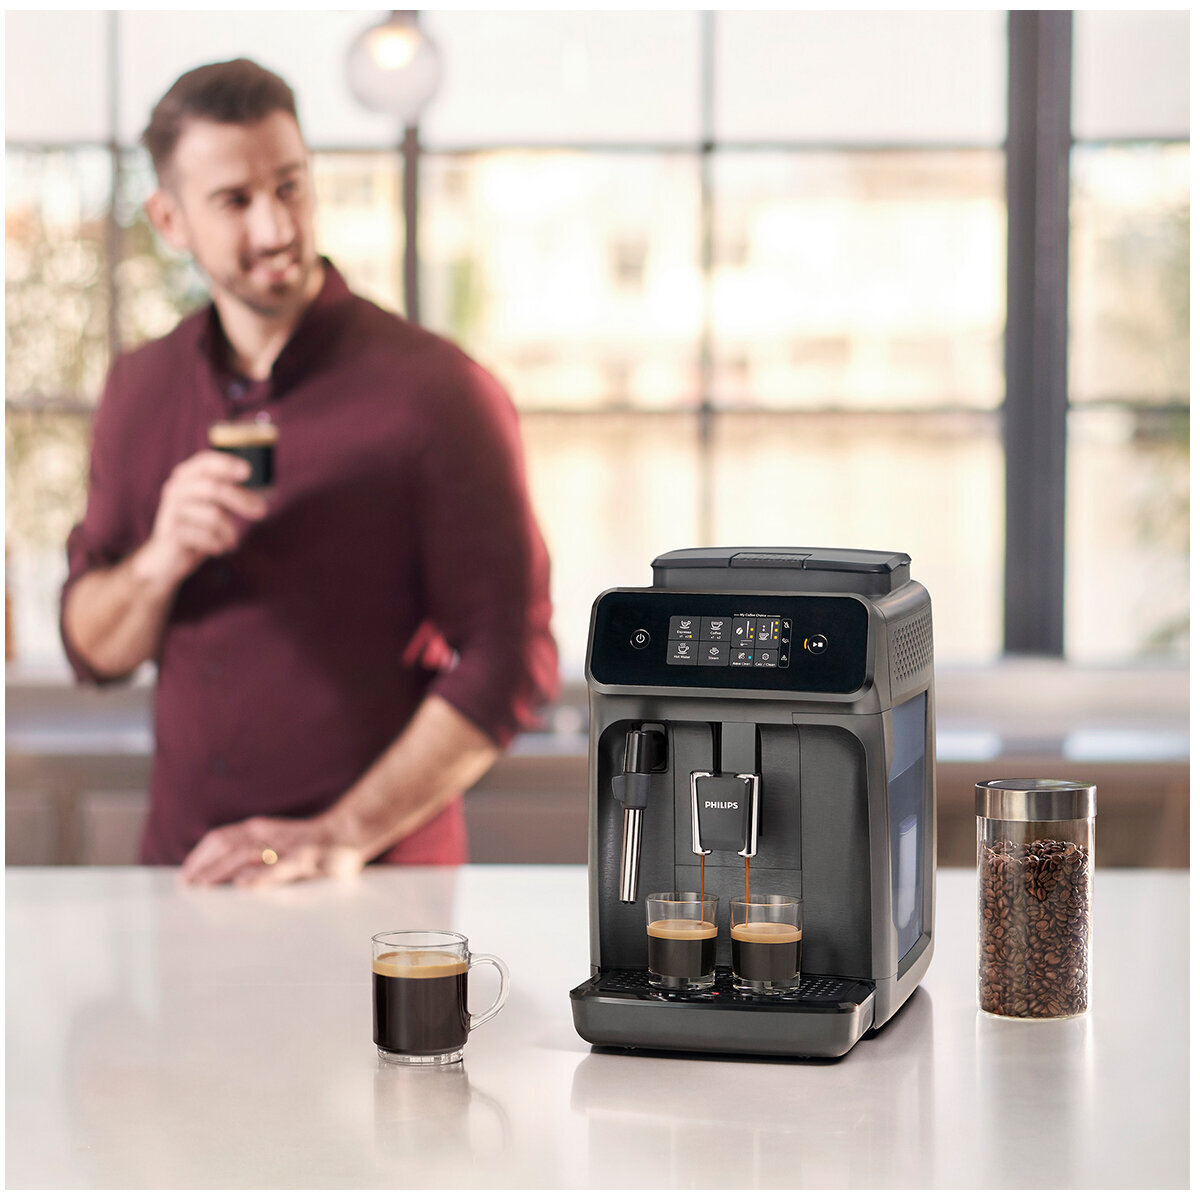 Philips 1200 Series Fully Automatic Espresso Machine - Classic